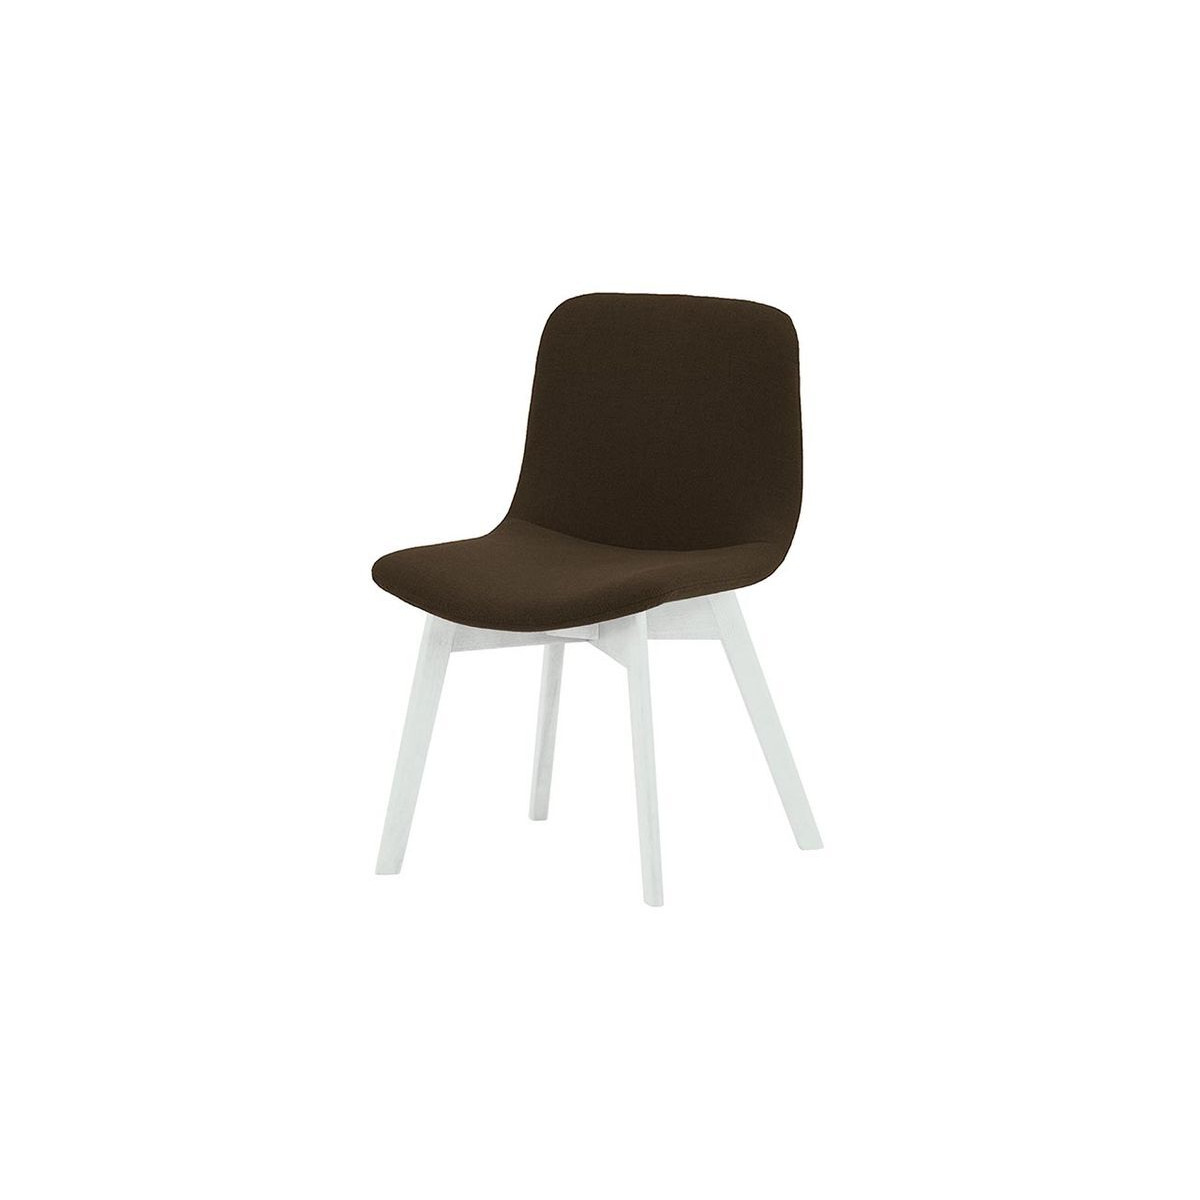 Giza Dining Chair Beech, brown, Leg colour: white - image 1